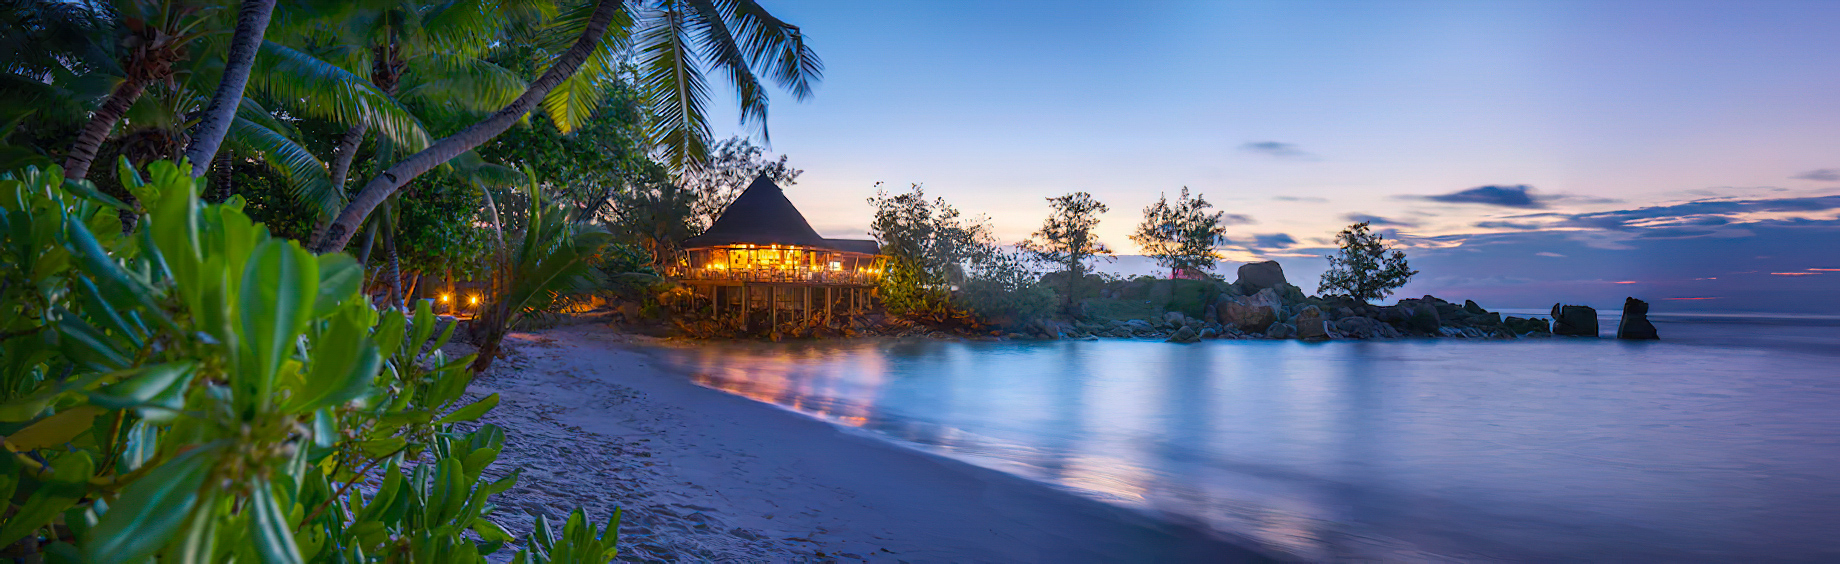 Constance Lemuria Resort – Praslin, Seychelles – The Nest Restaurant Beach View